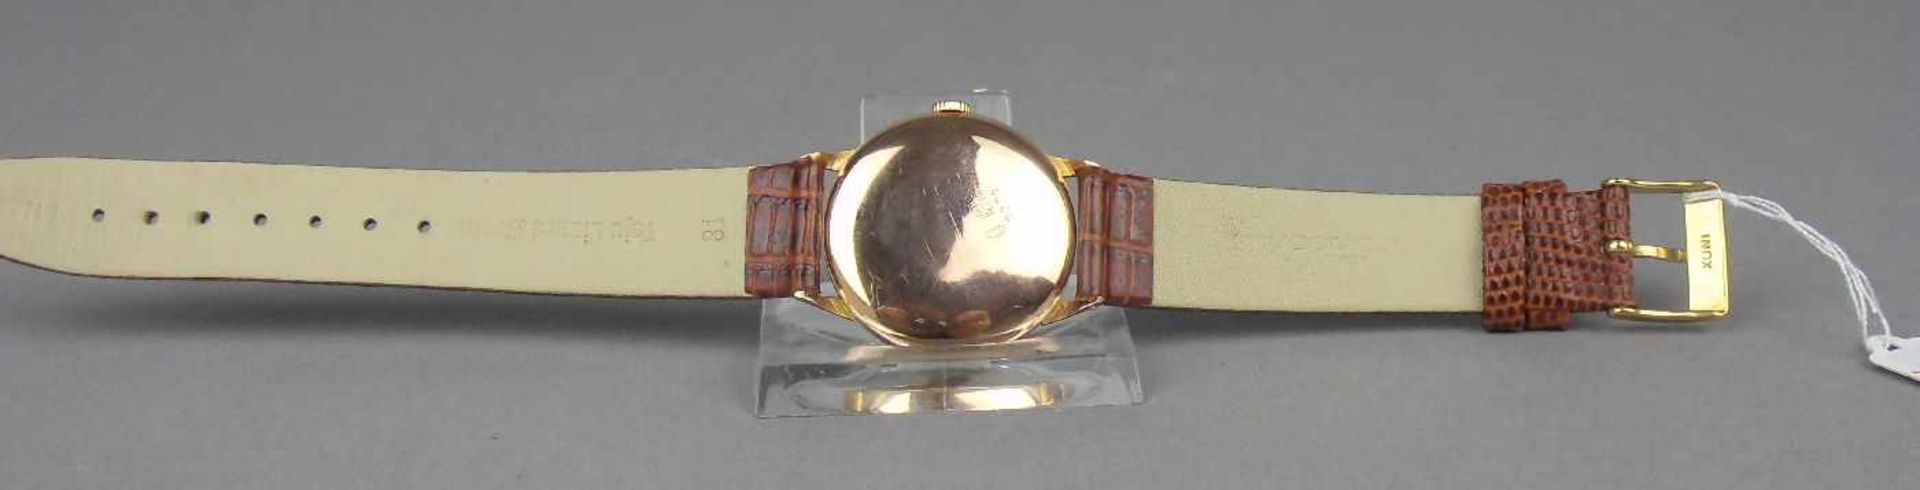 VINTAGE ARMBANDUHR OMEGA - RED STAR / wristwatch, Handaufzug, 1960, Manufaktur Omega Watch Co. S. A. - Image 6 of 9